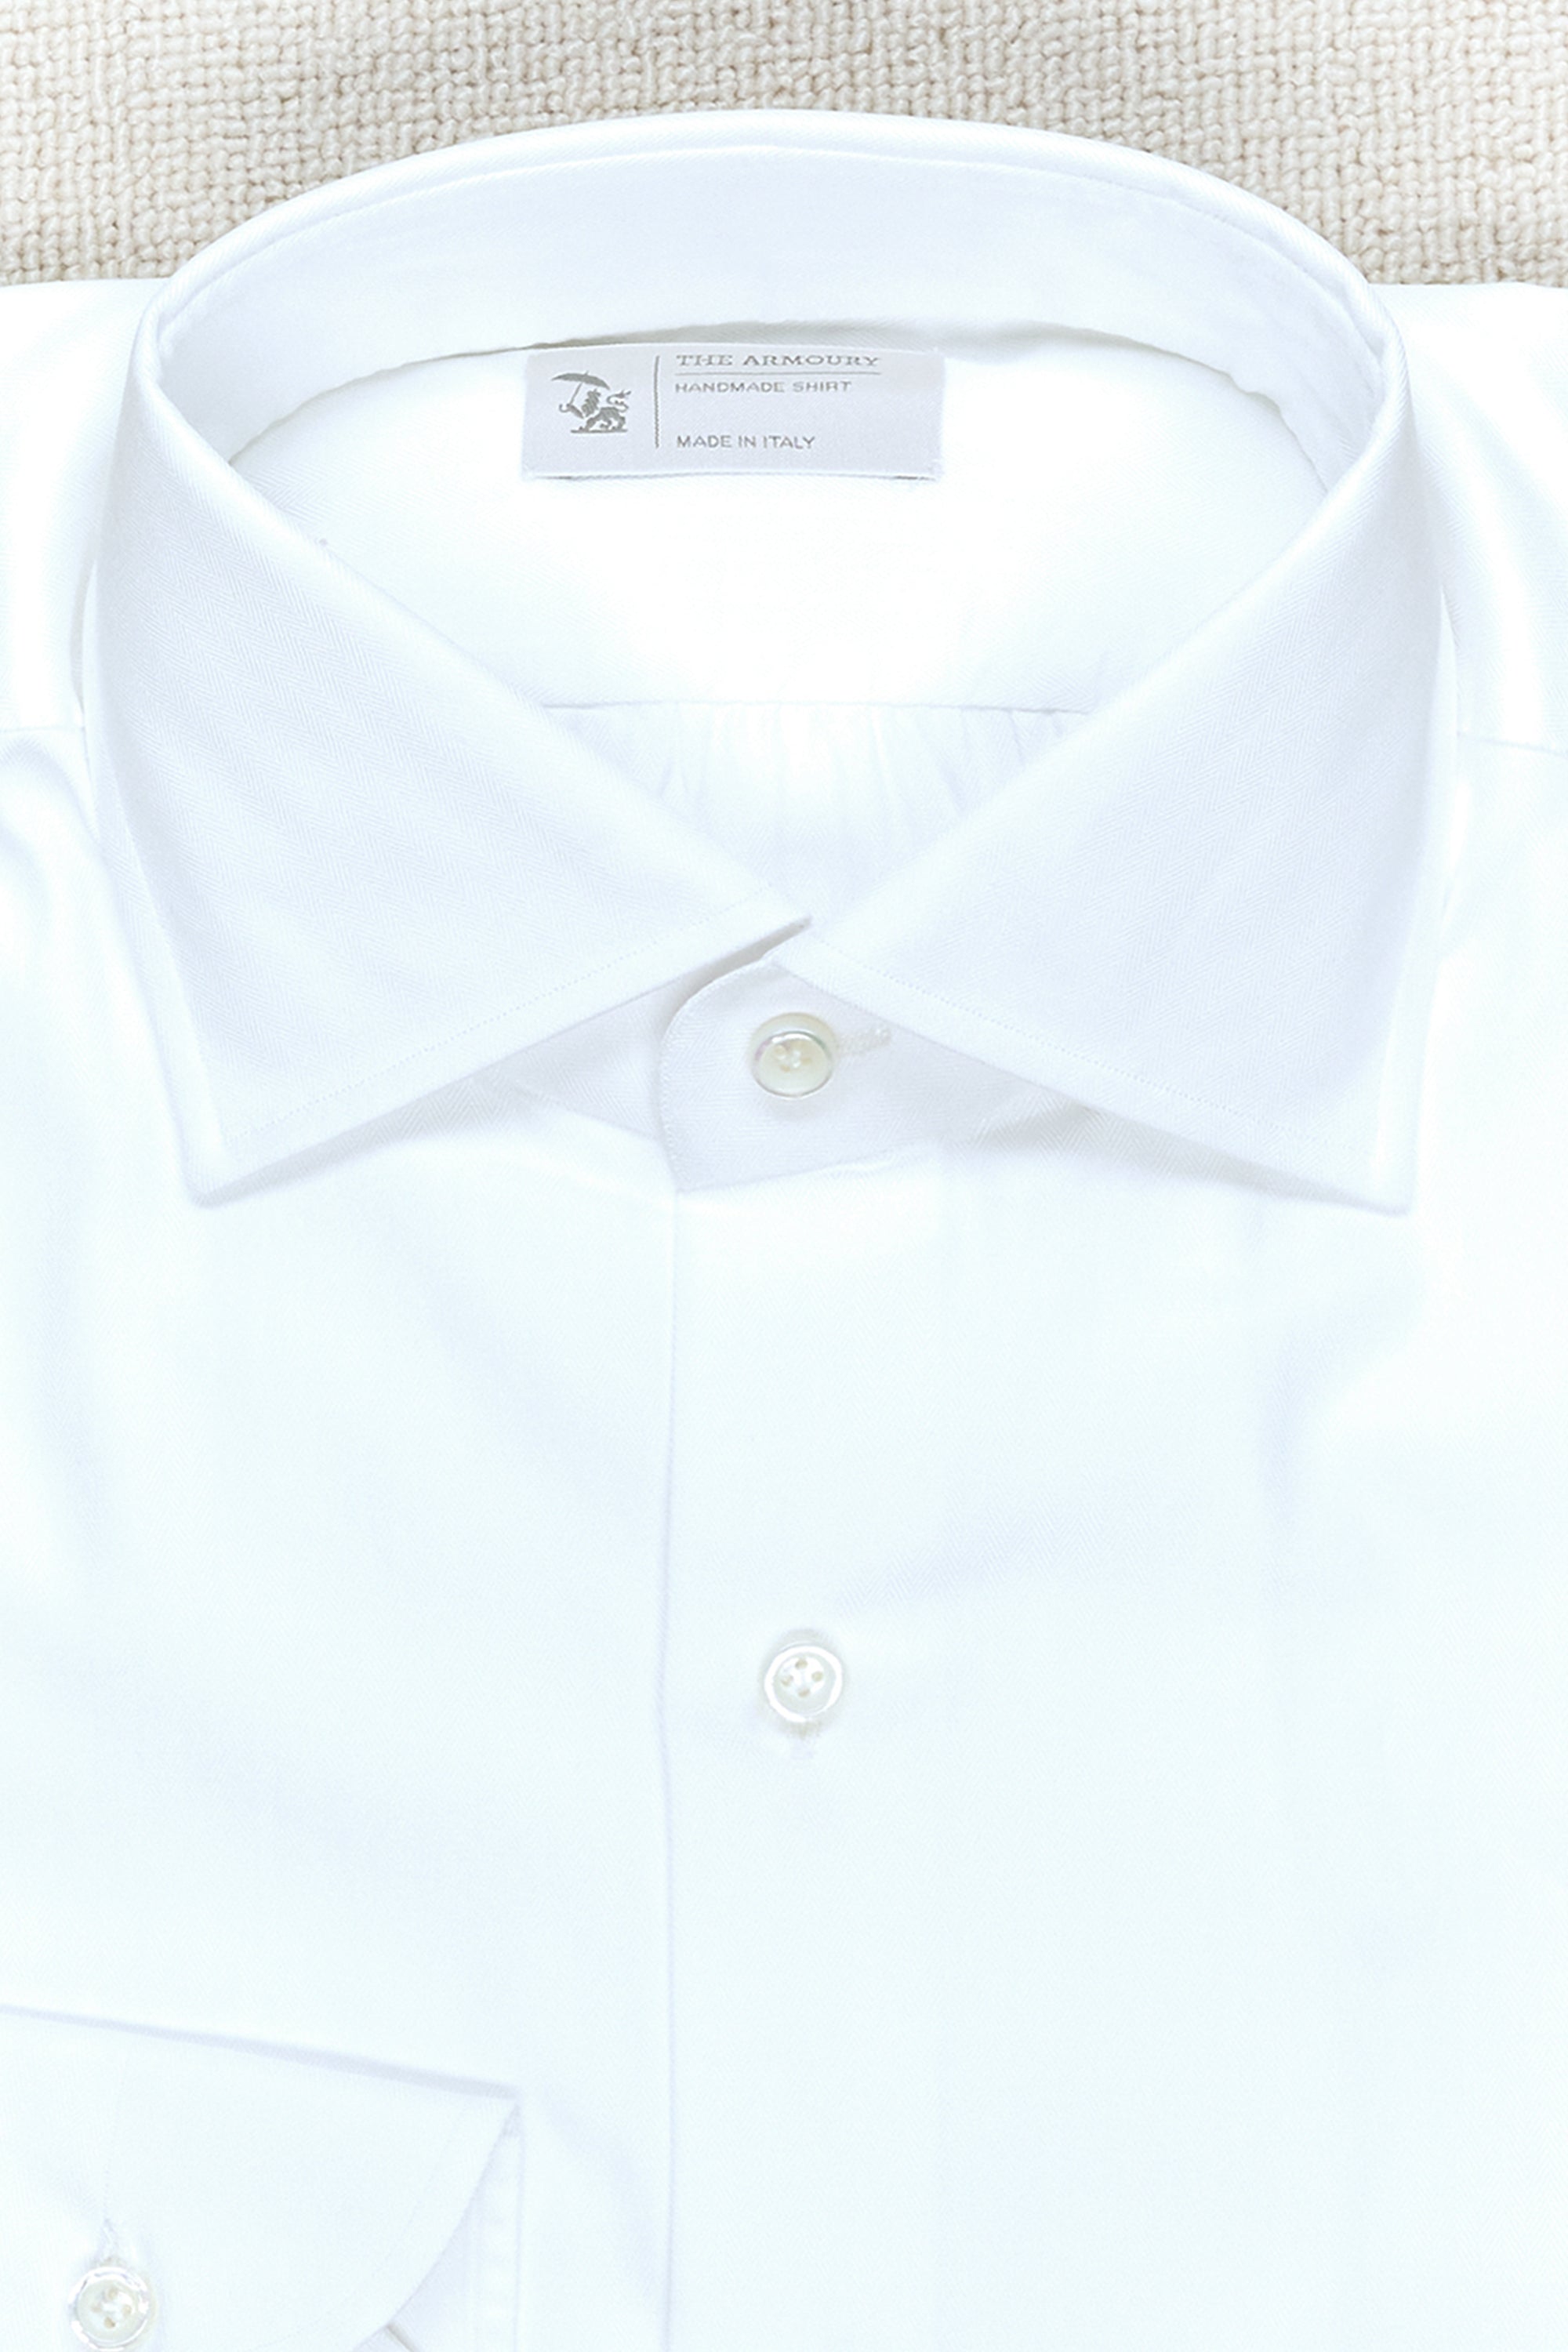 The Armoury White Cotton Herringbone Spread Collar Shirt